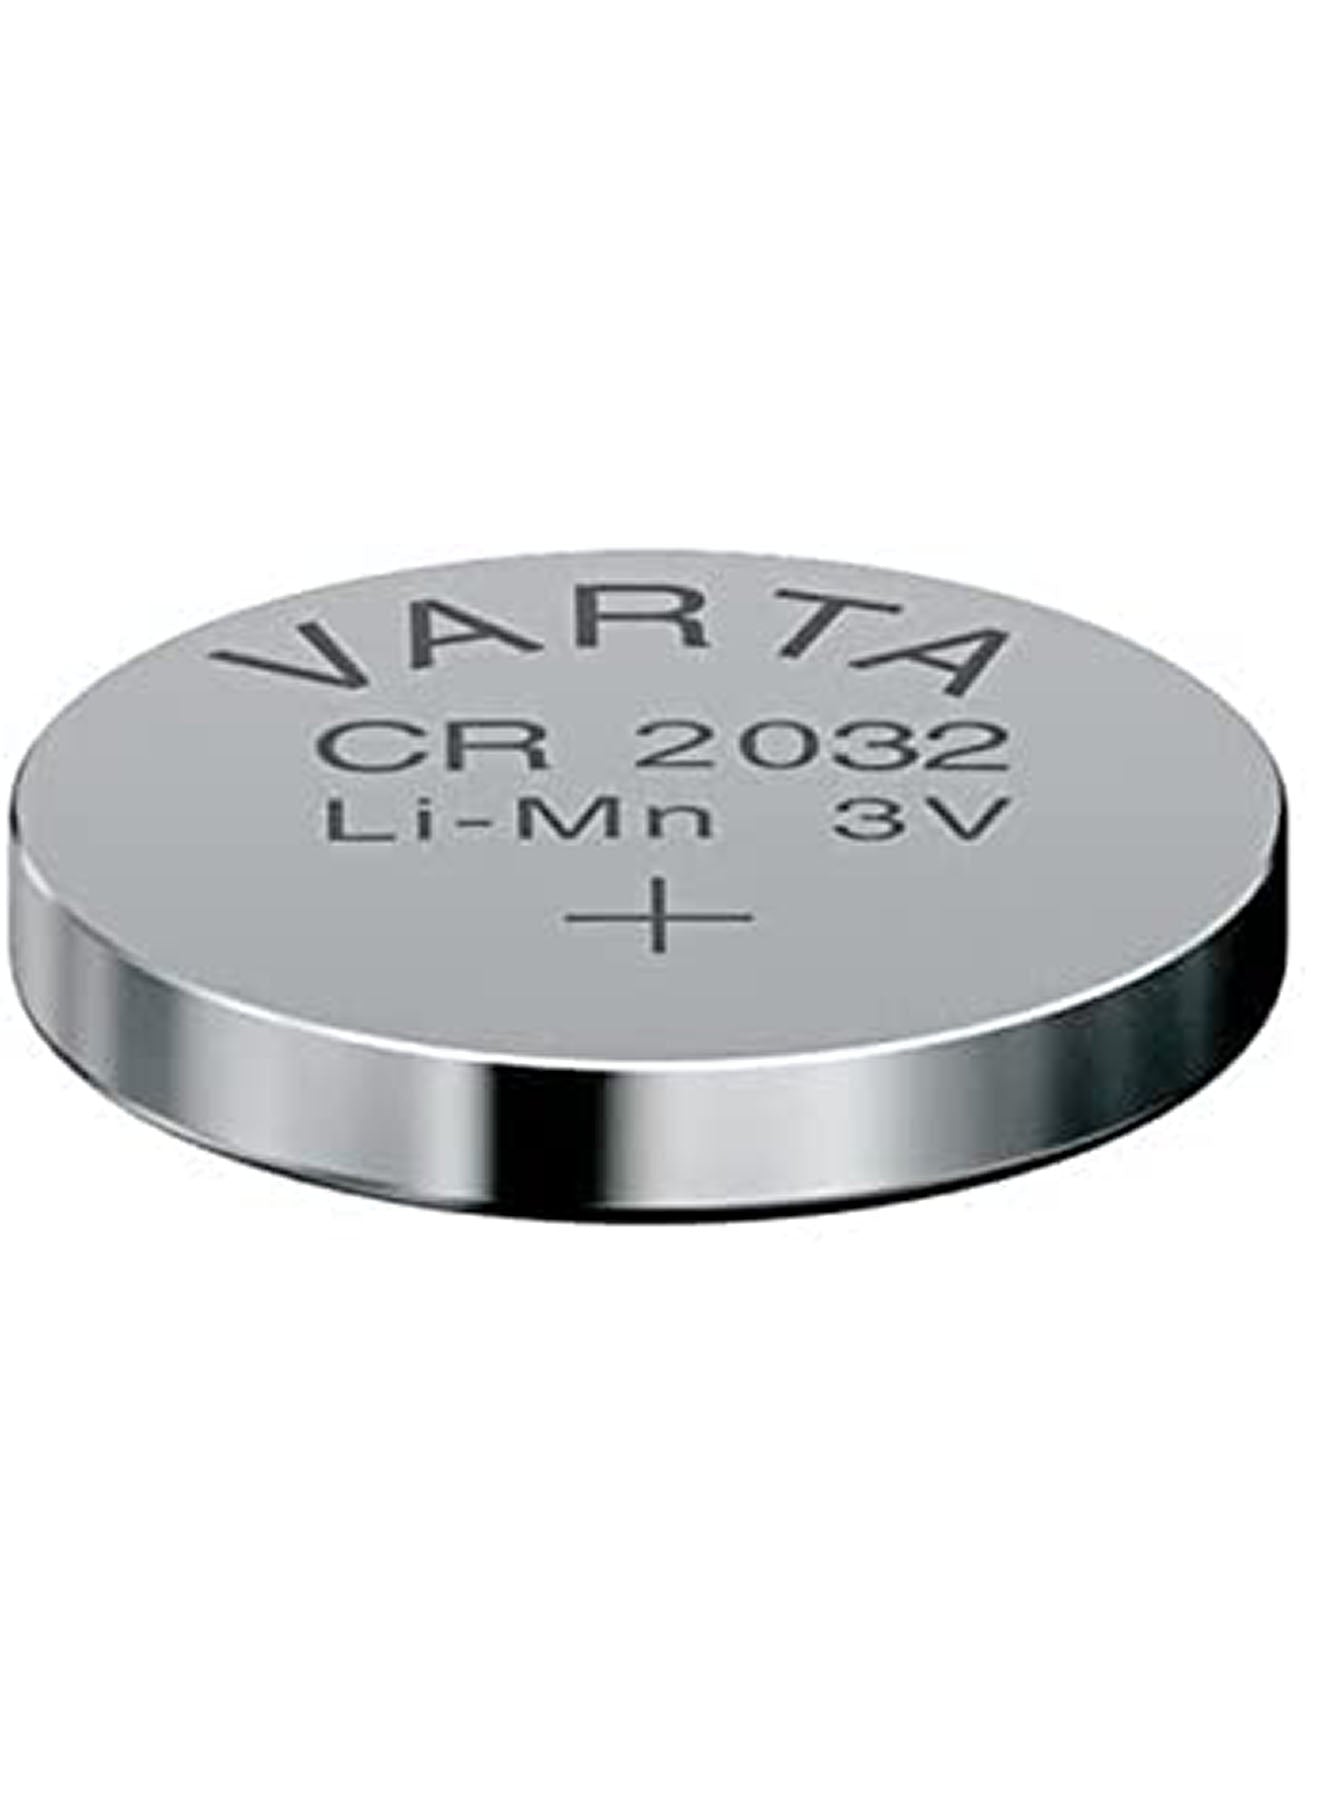 Varta Lithium CR 2032 button cell 3V battery Value Pack of 3 